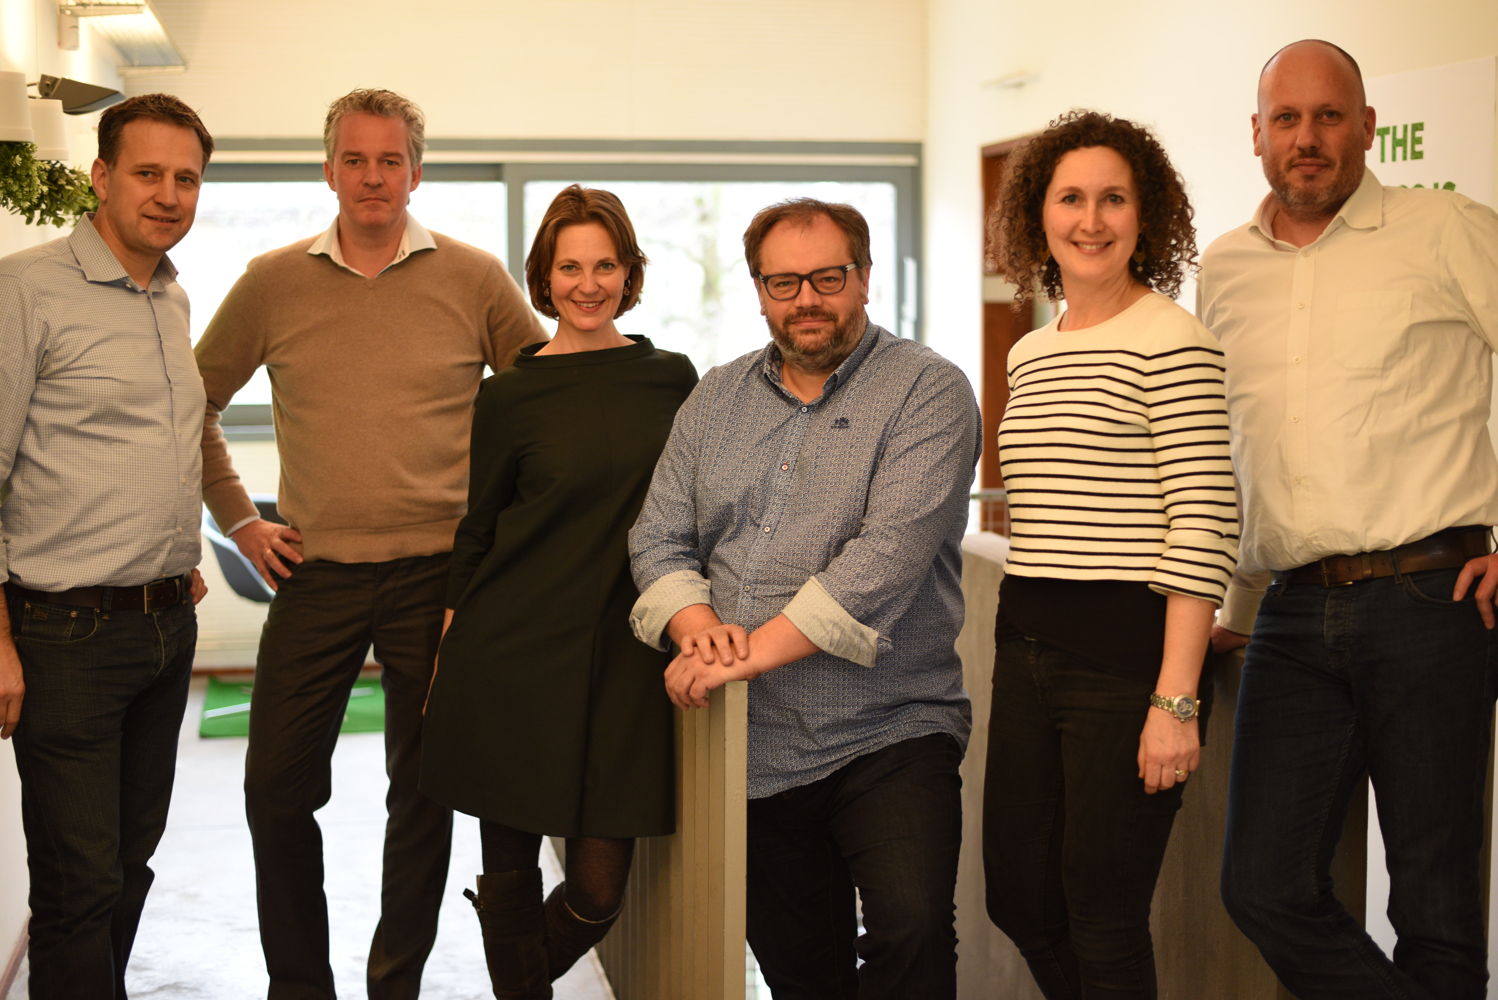 ‘Sproutingly yours’,

From left to right: Hugo Hanselmann, Geert Fernhout, Florence Hoevers, Jurgen Coetsiers, Majorie van Kuik en Pascal Binard